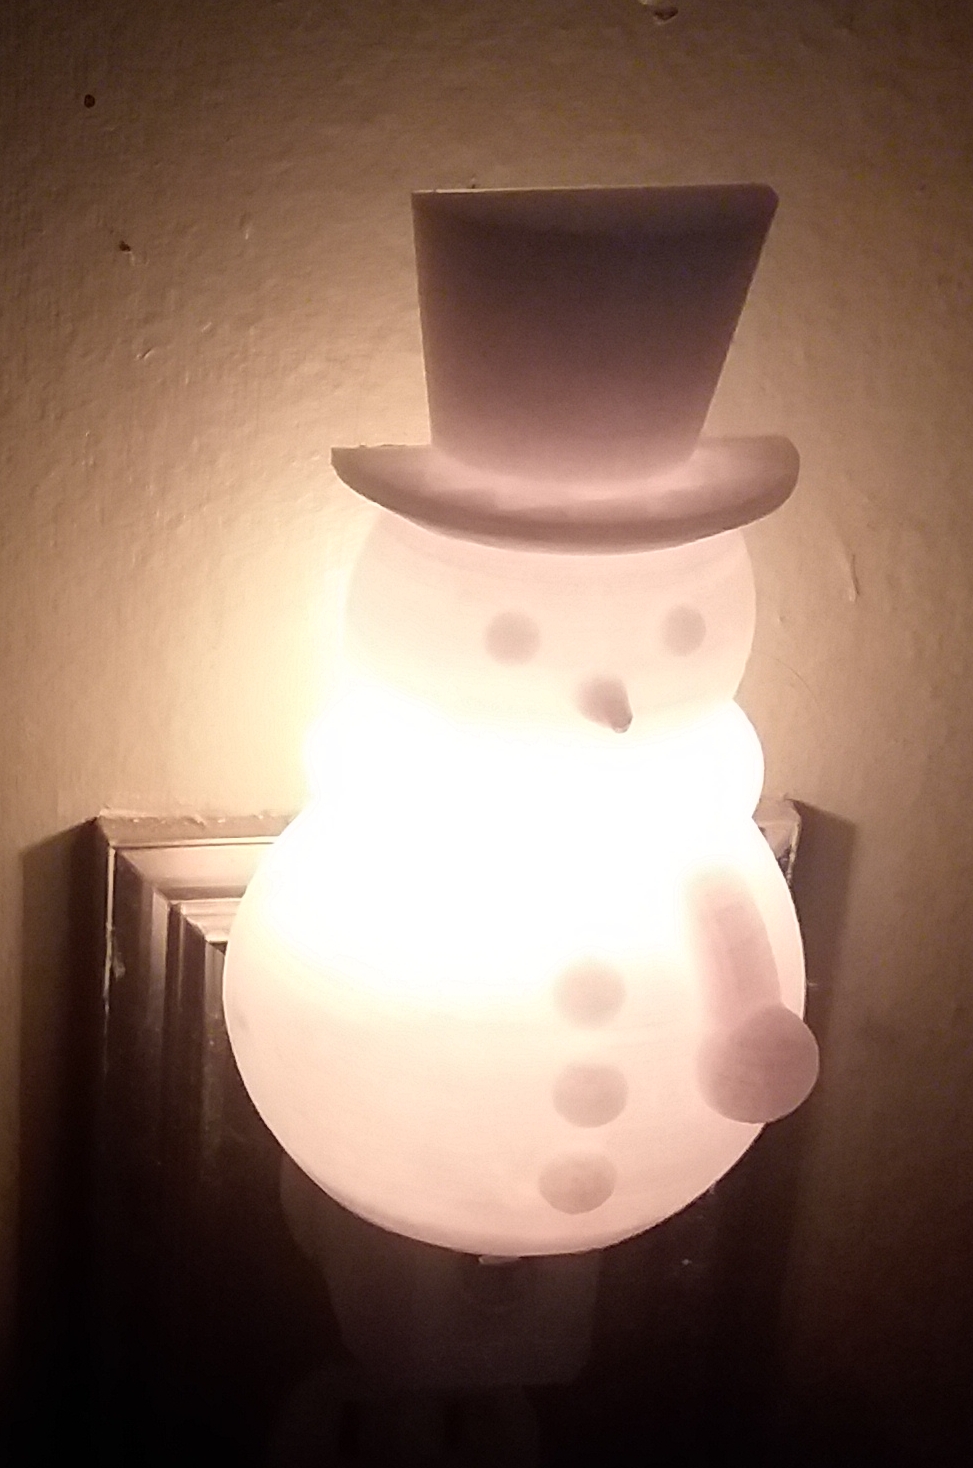 Snowman night light